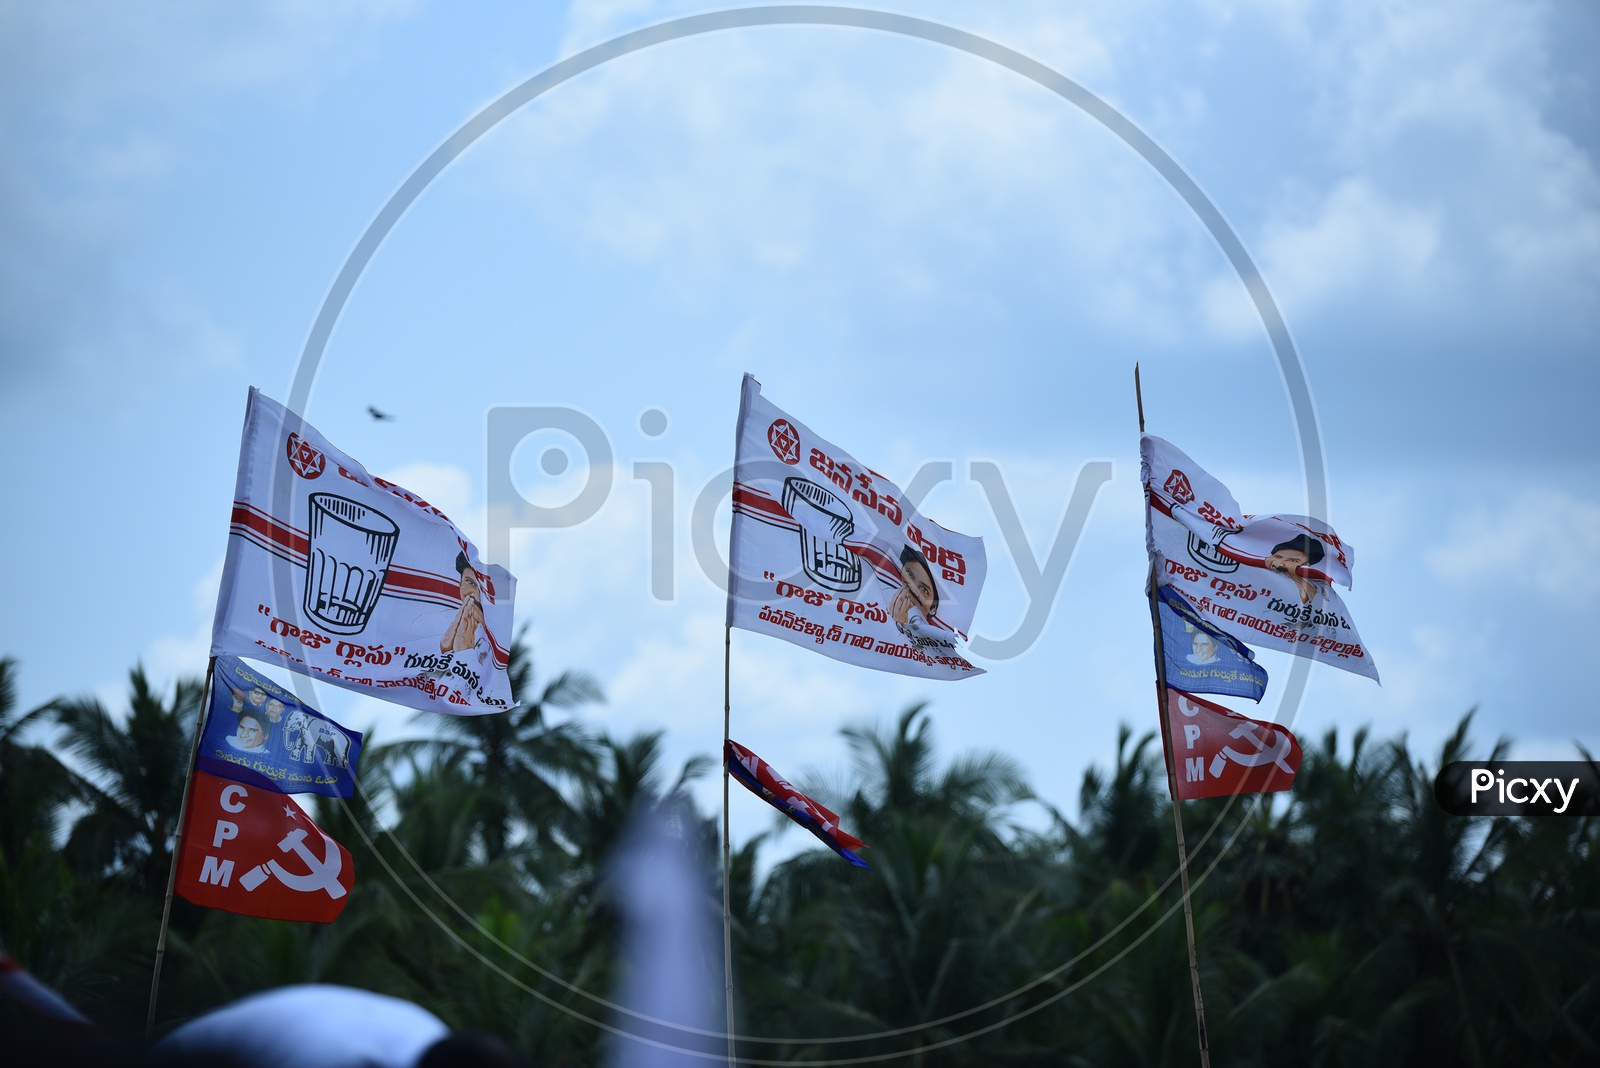 Jana sena party symbol 'Glass tumbler' on flags